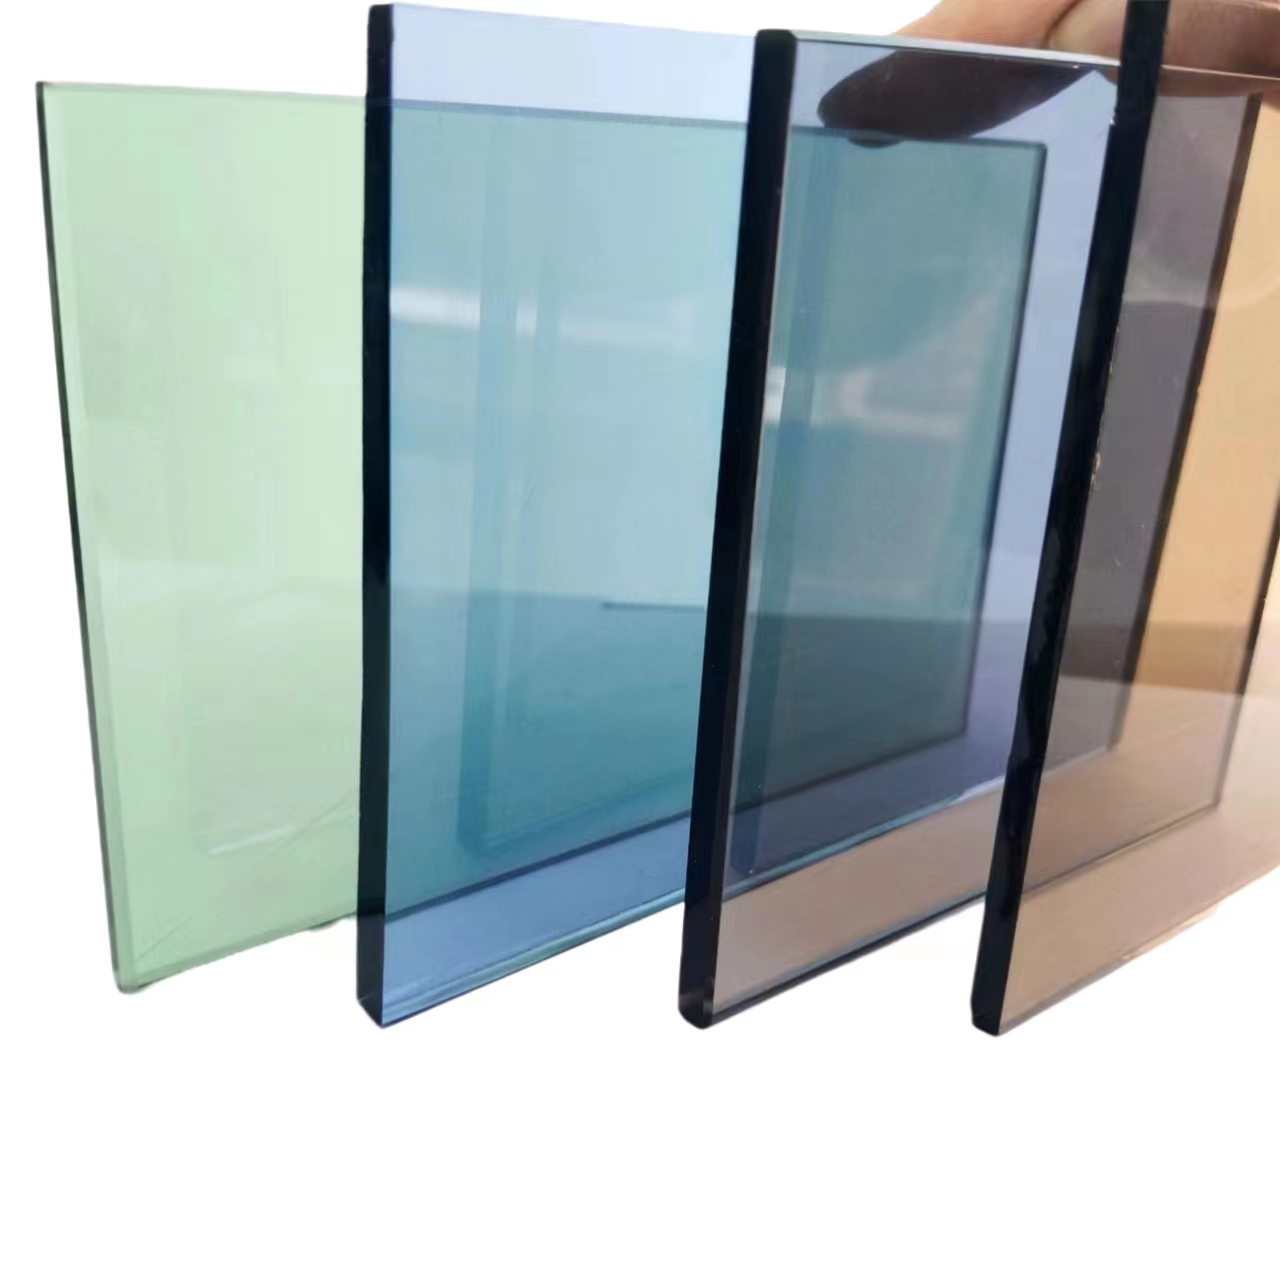 Brons floatglas, bruin floatglas, gekleurd floatglas Uitgelichte afbeelding